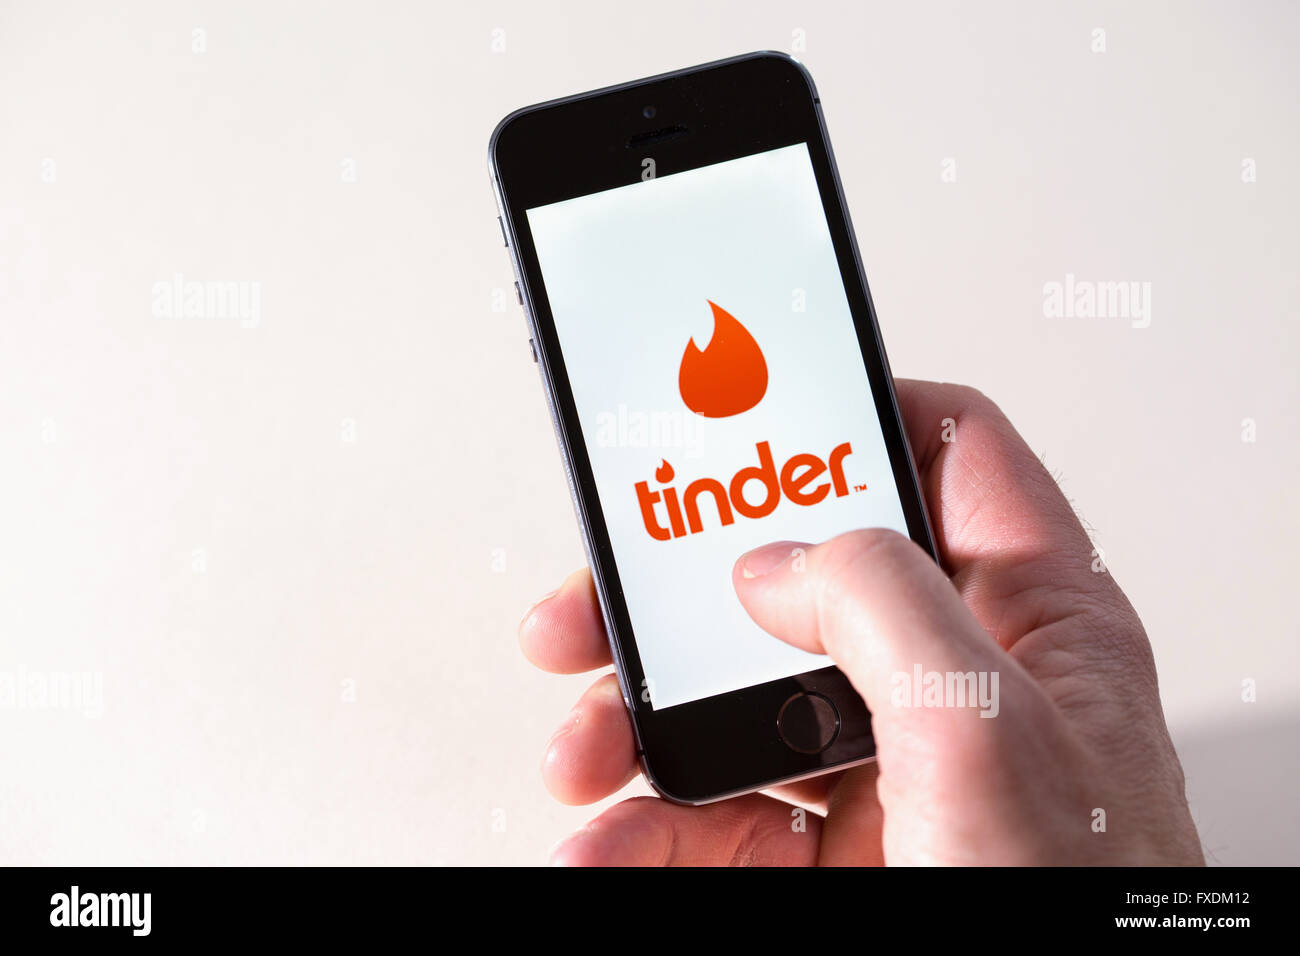 Handy-dating-apps